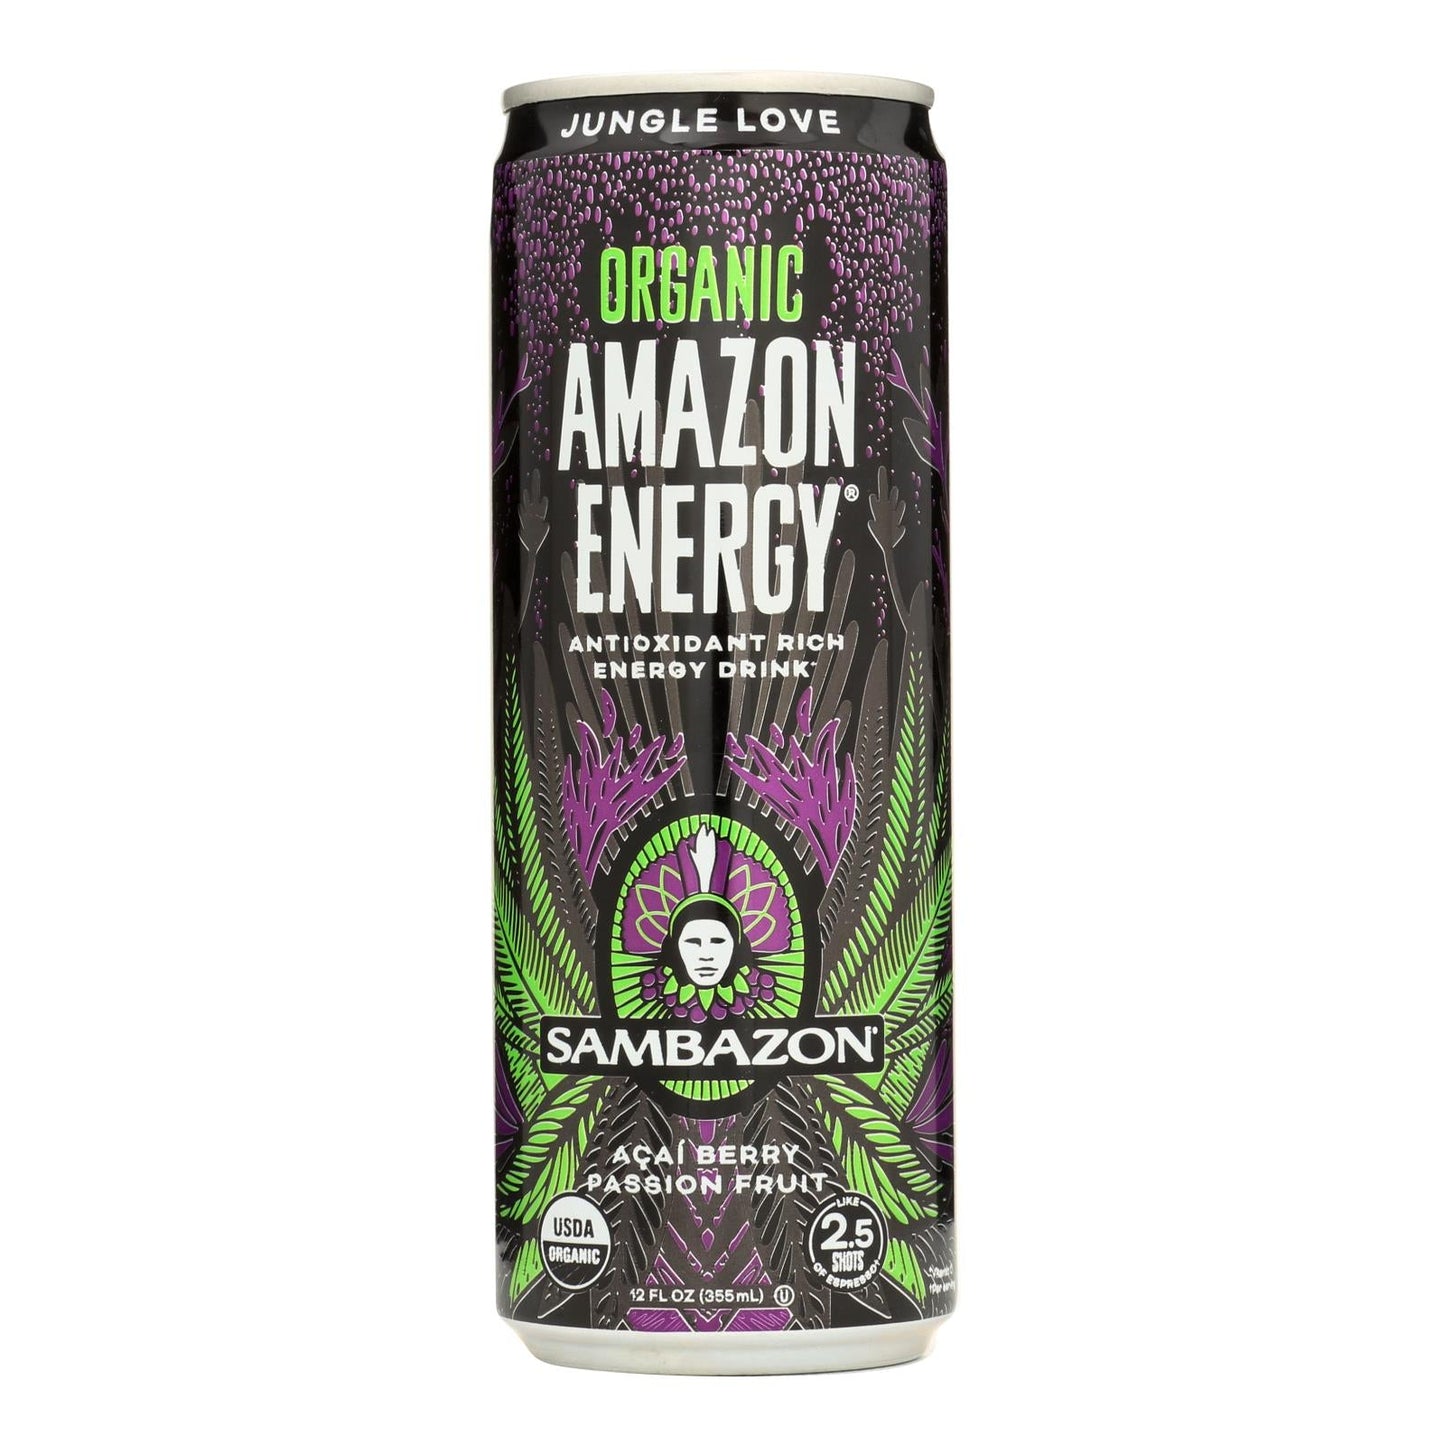 Sambazon Organic Amazon Energy Drink - Jungle Love - Case Of 12 - 12 Fl Oz - OnlyNaturals